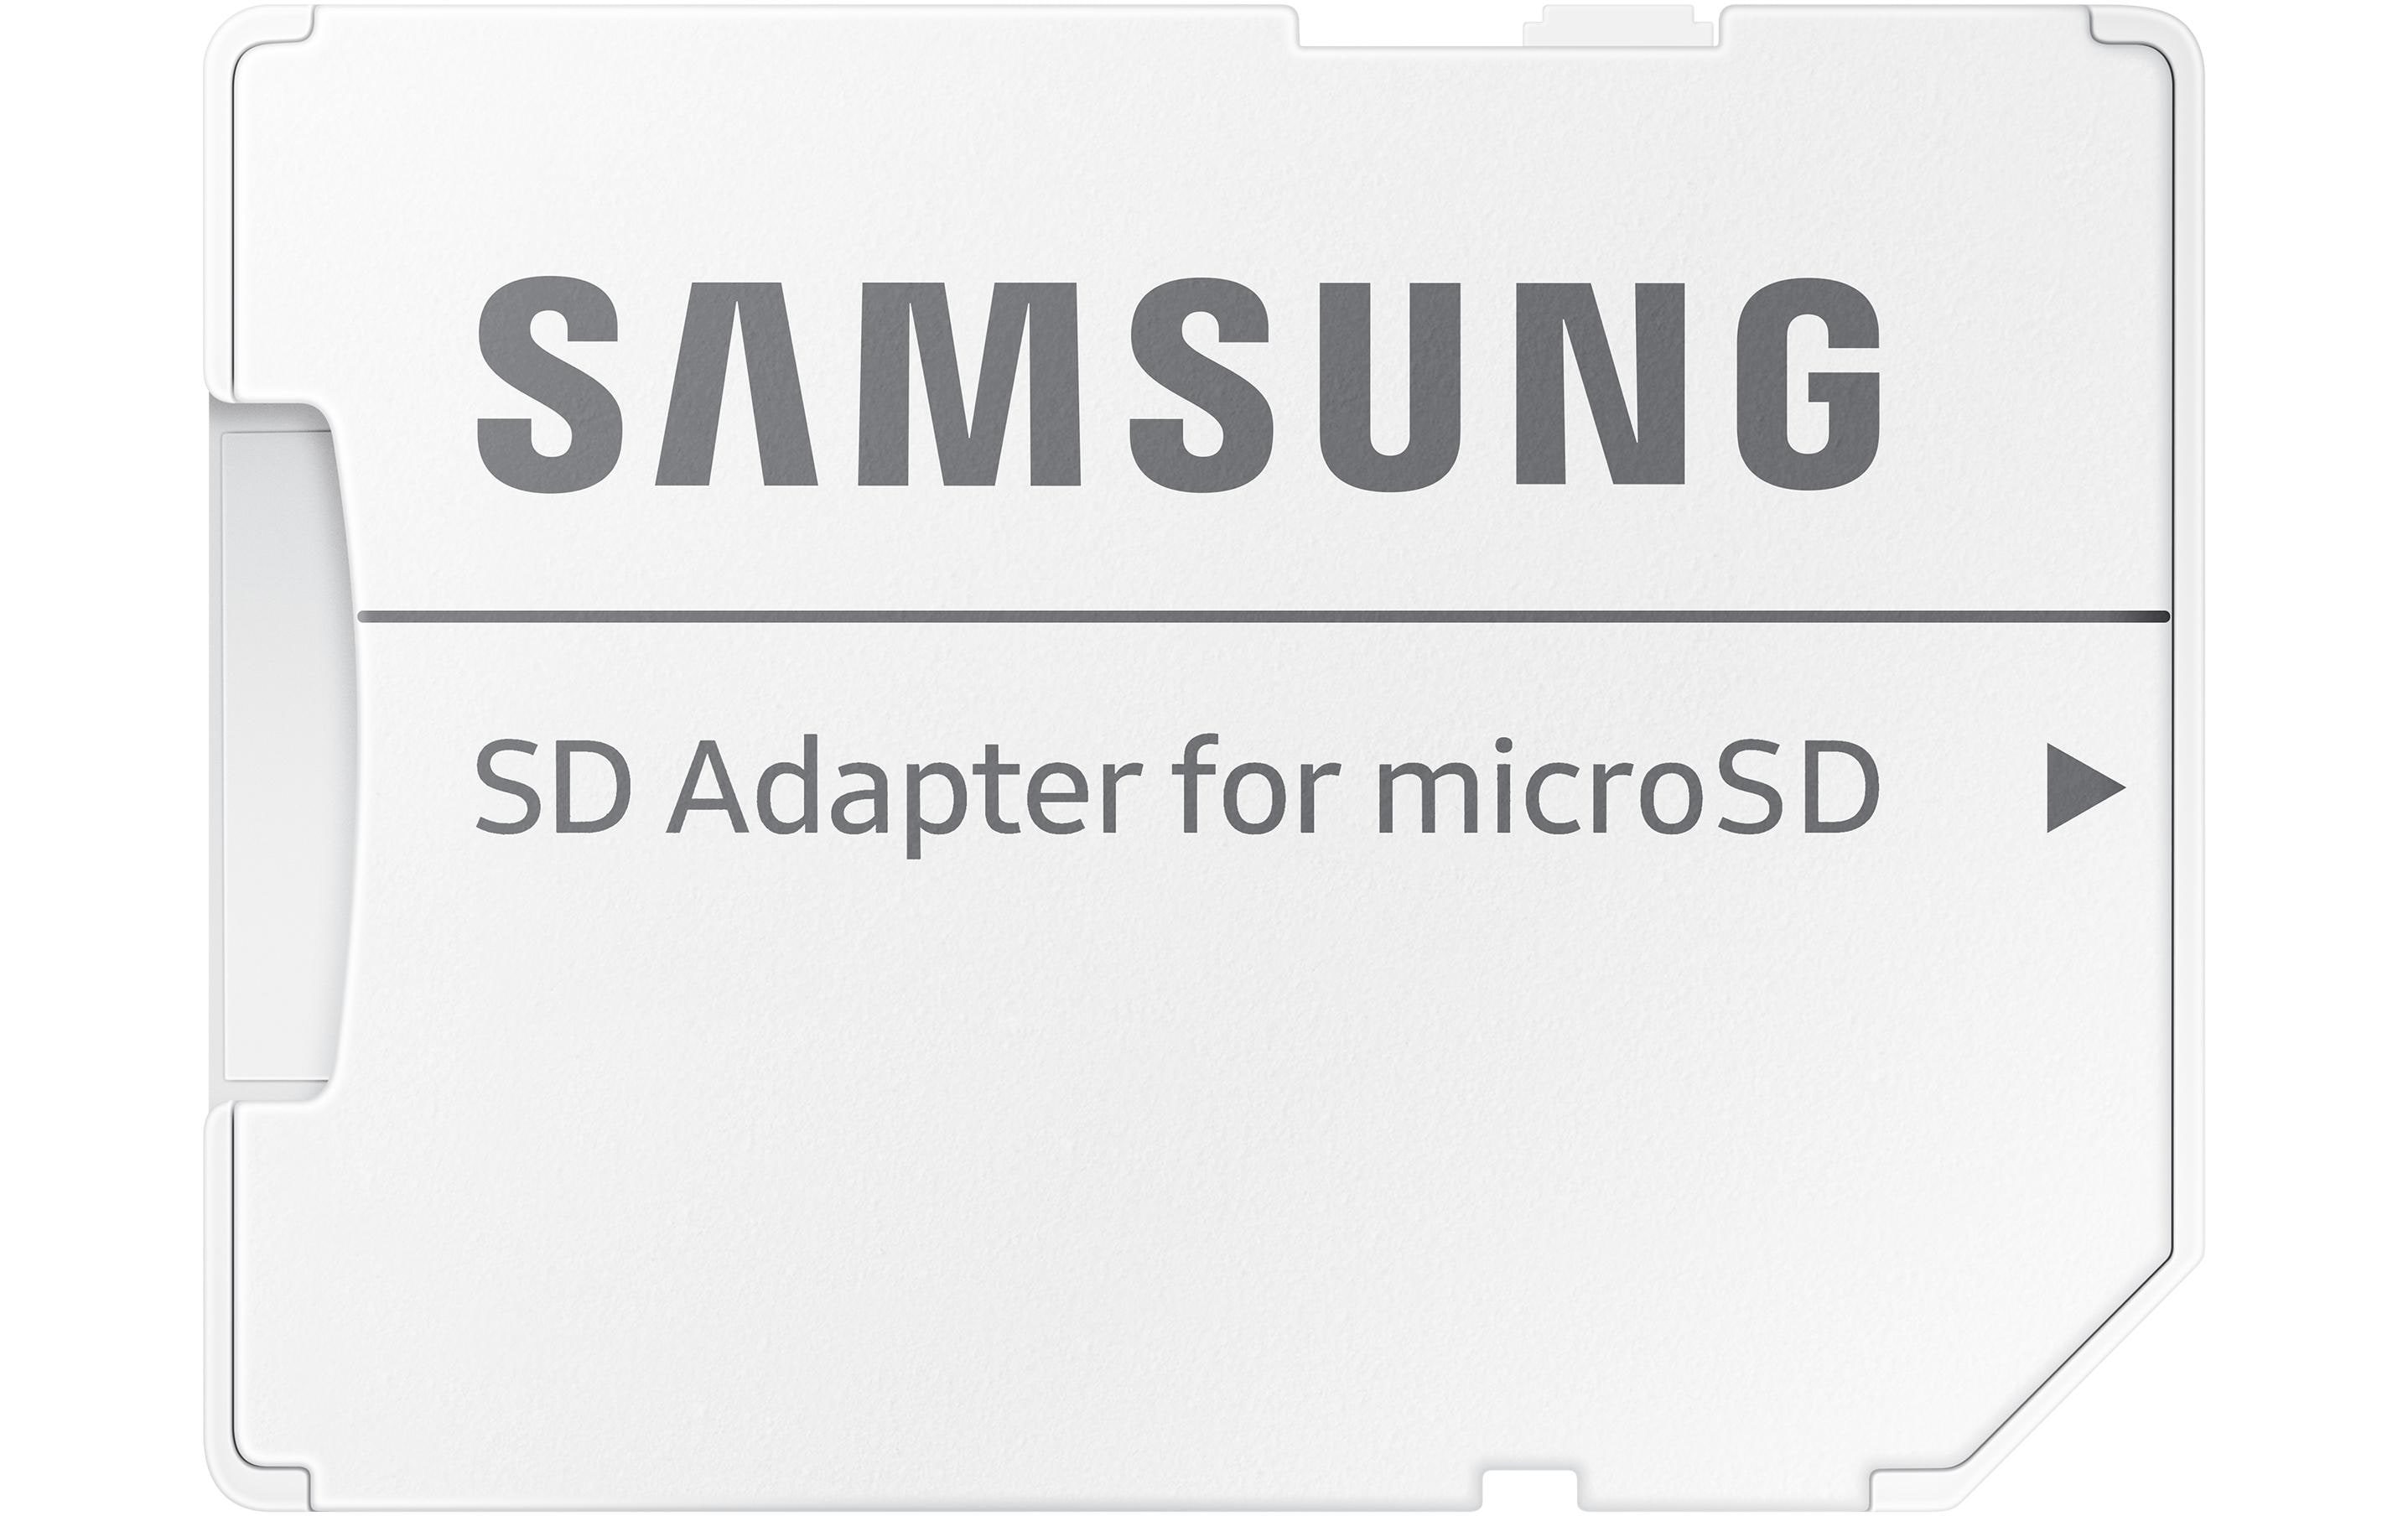 Samsung microSDXC-Karte Pro Plus 256 GB